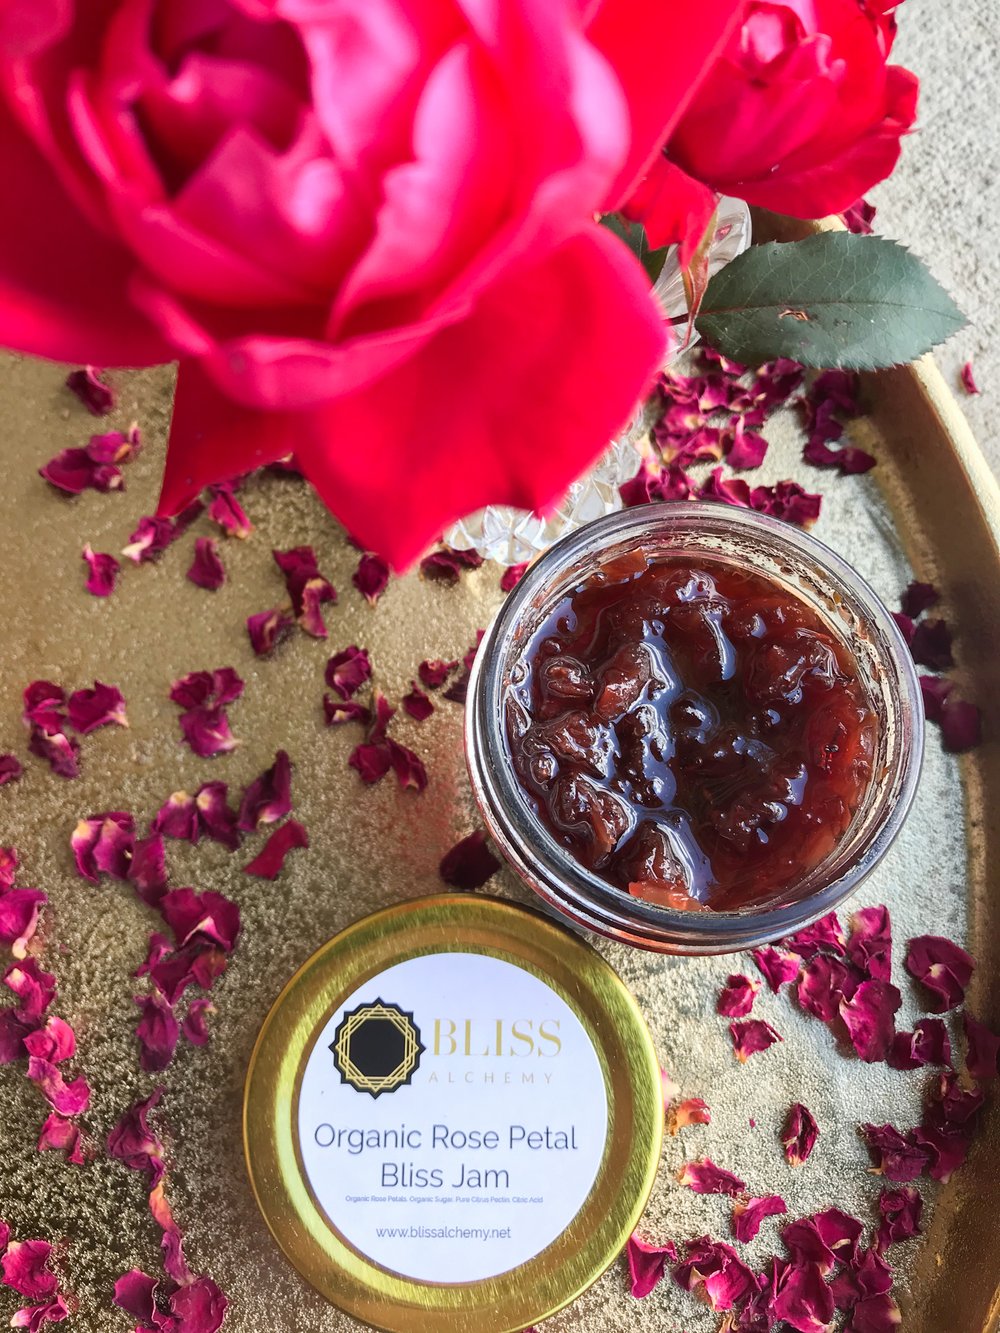 Magliano Rose Petal Jam Preserve, Certified Organic 4.06 oz